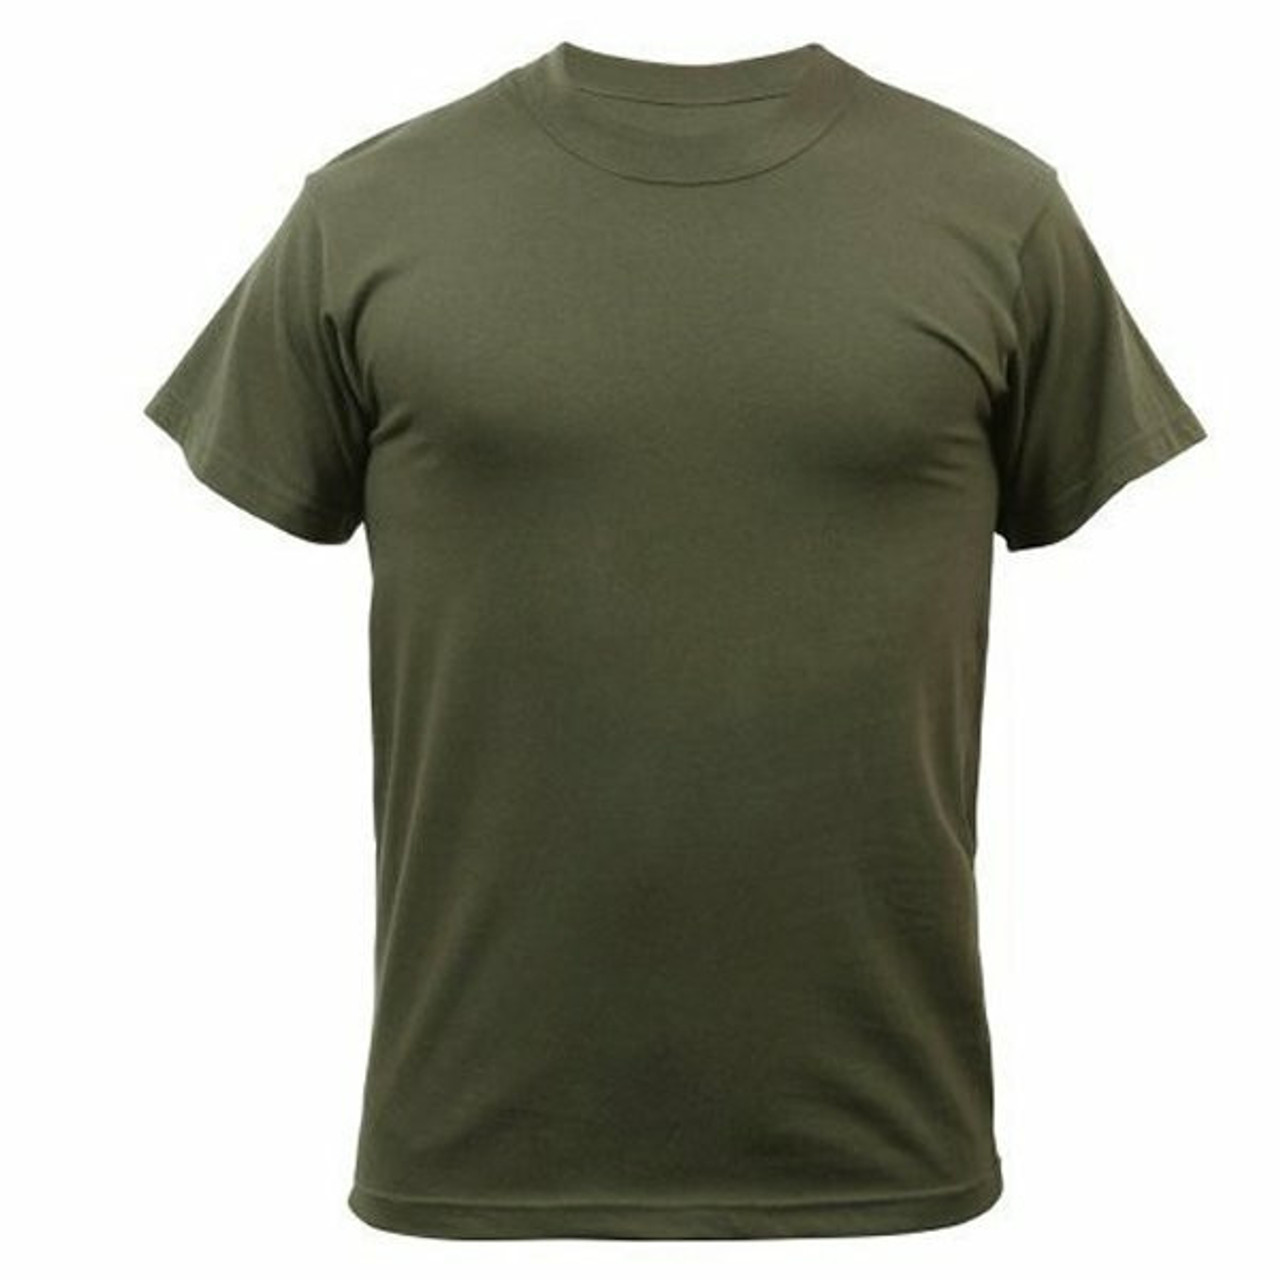 Veteran T-Shirts - Shop Vietnam Veteran Tees